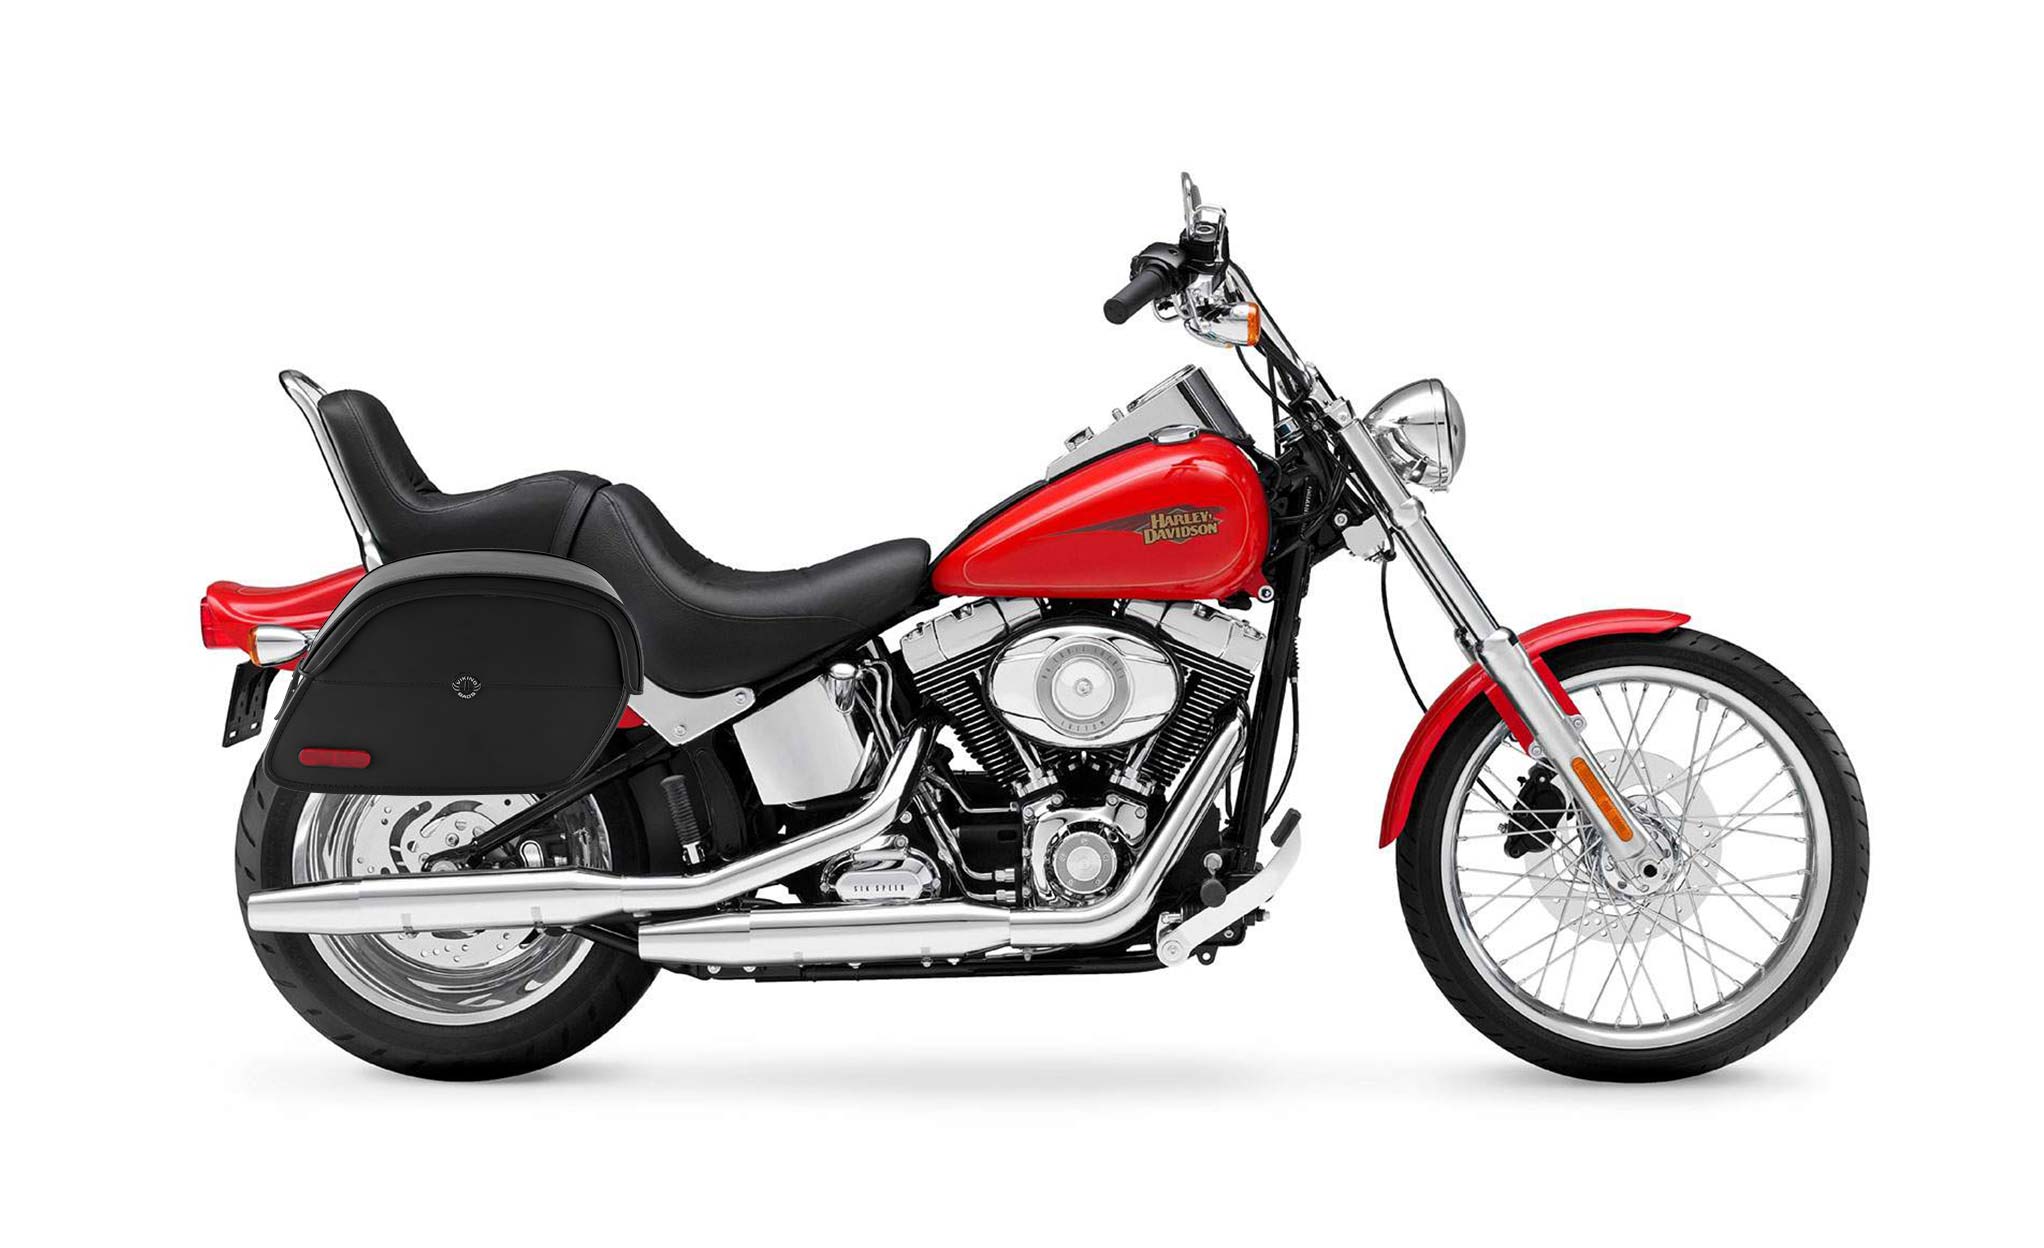 Viking California Large Leather Motorcycle Saddlebags For Harley Davidson Softail Custom Fxstc on Bike Photo @expand